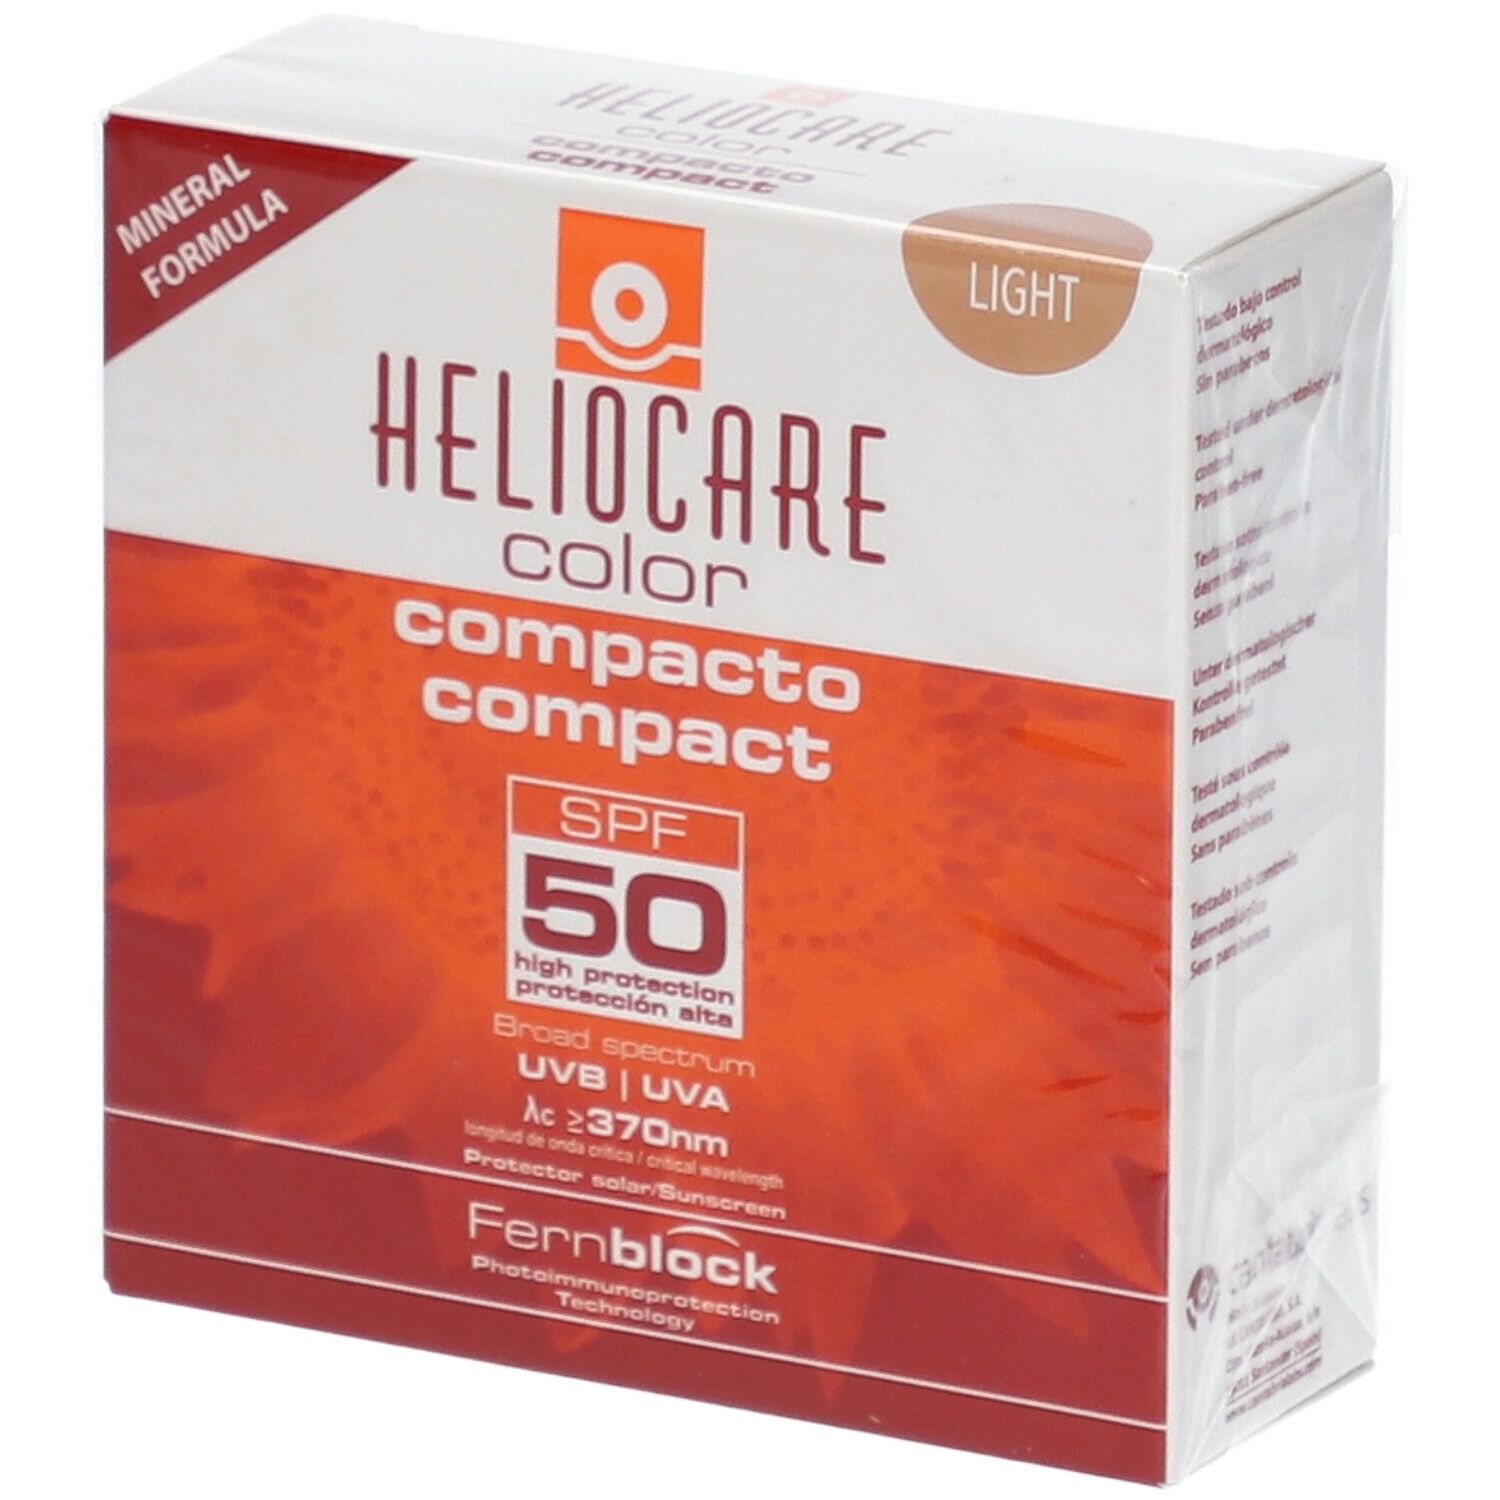 Heliocare® Compact Make-up SPF 50 light